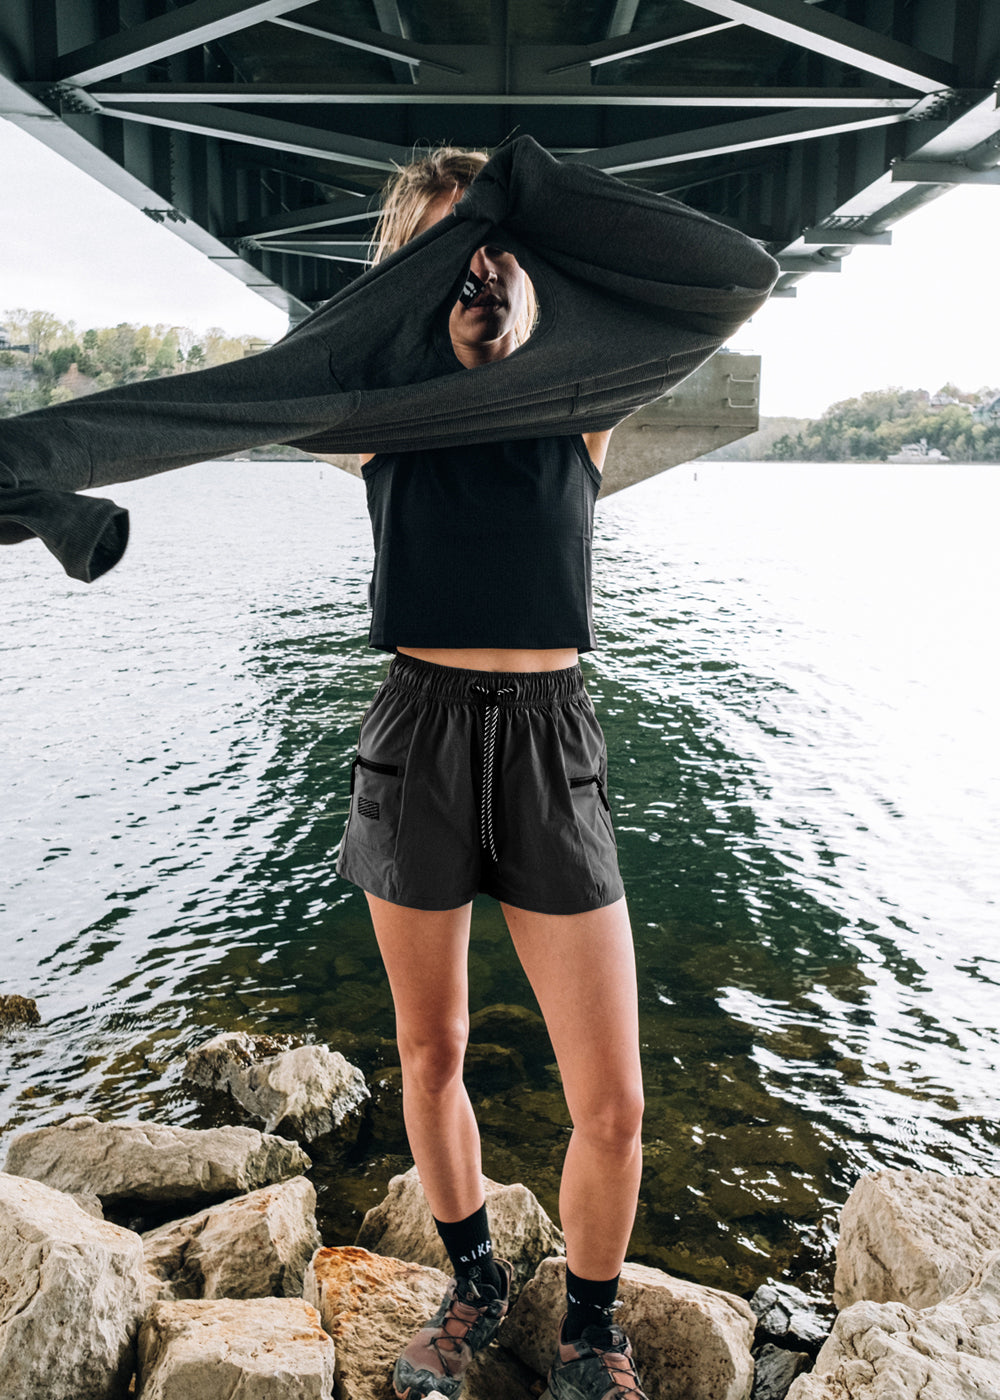 Women's Zip Pocket Shorts  Lightweight Summer Hiking Shorts – Guts Fishing  Apparel